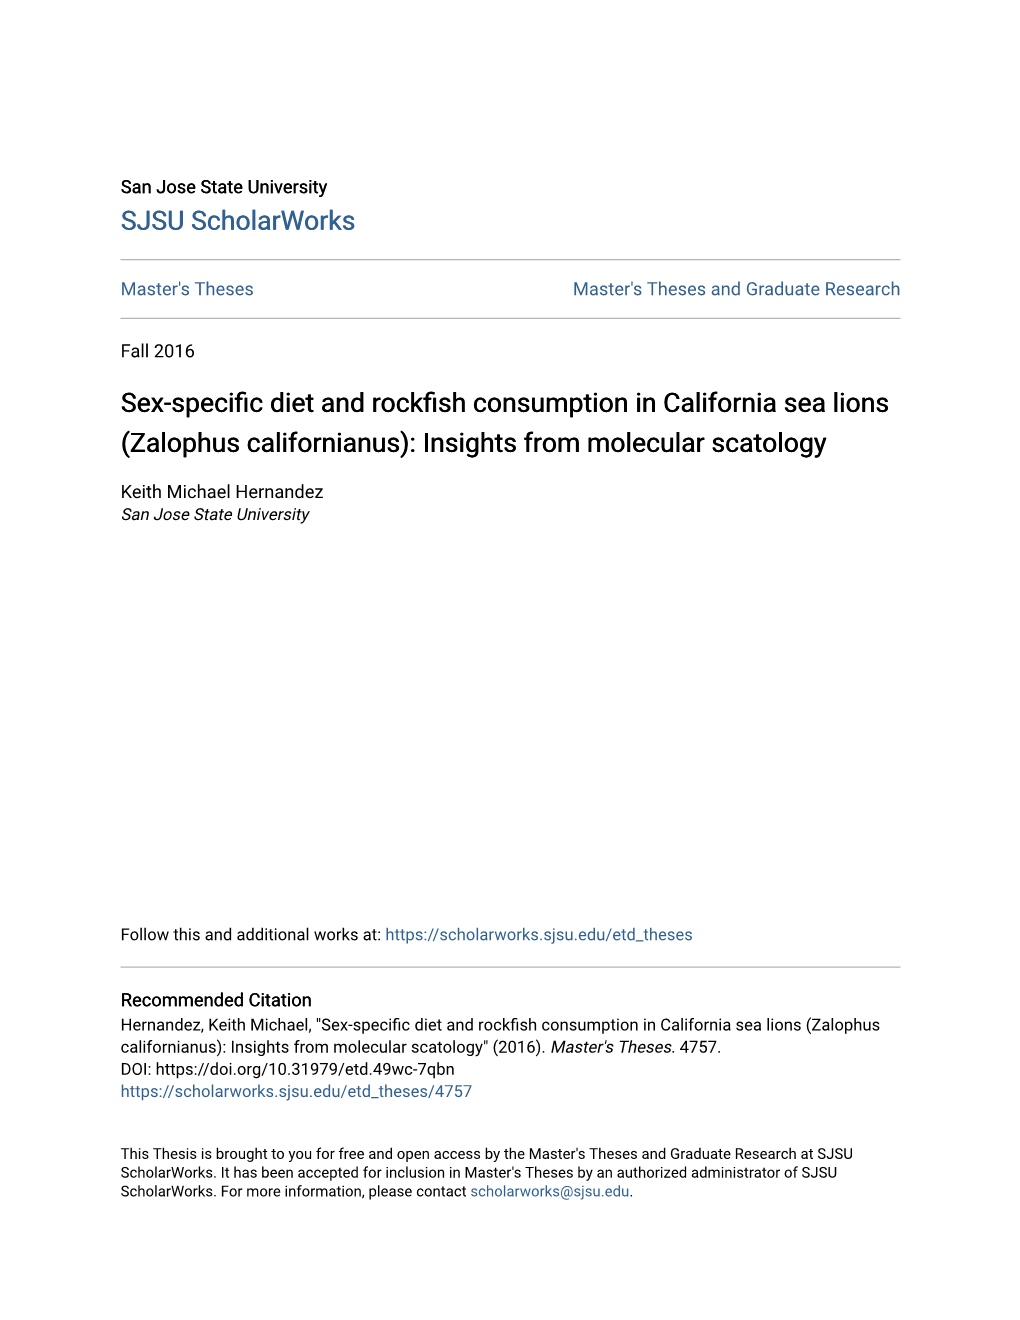 Zalophus Californianus): Insights from Molecular Scatology